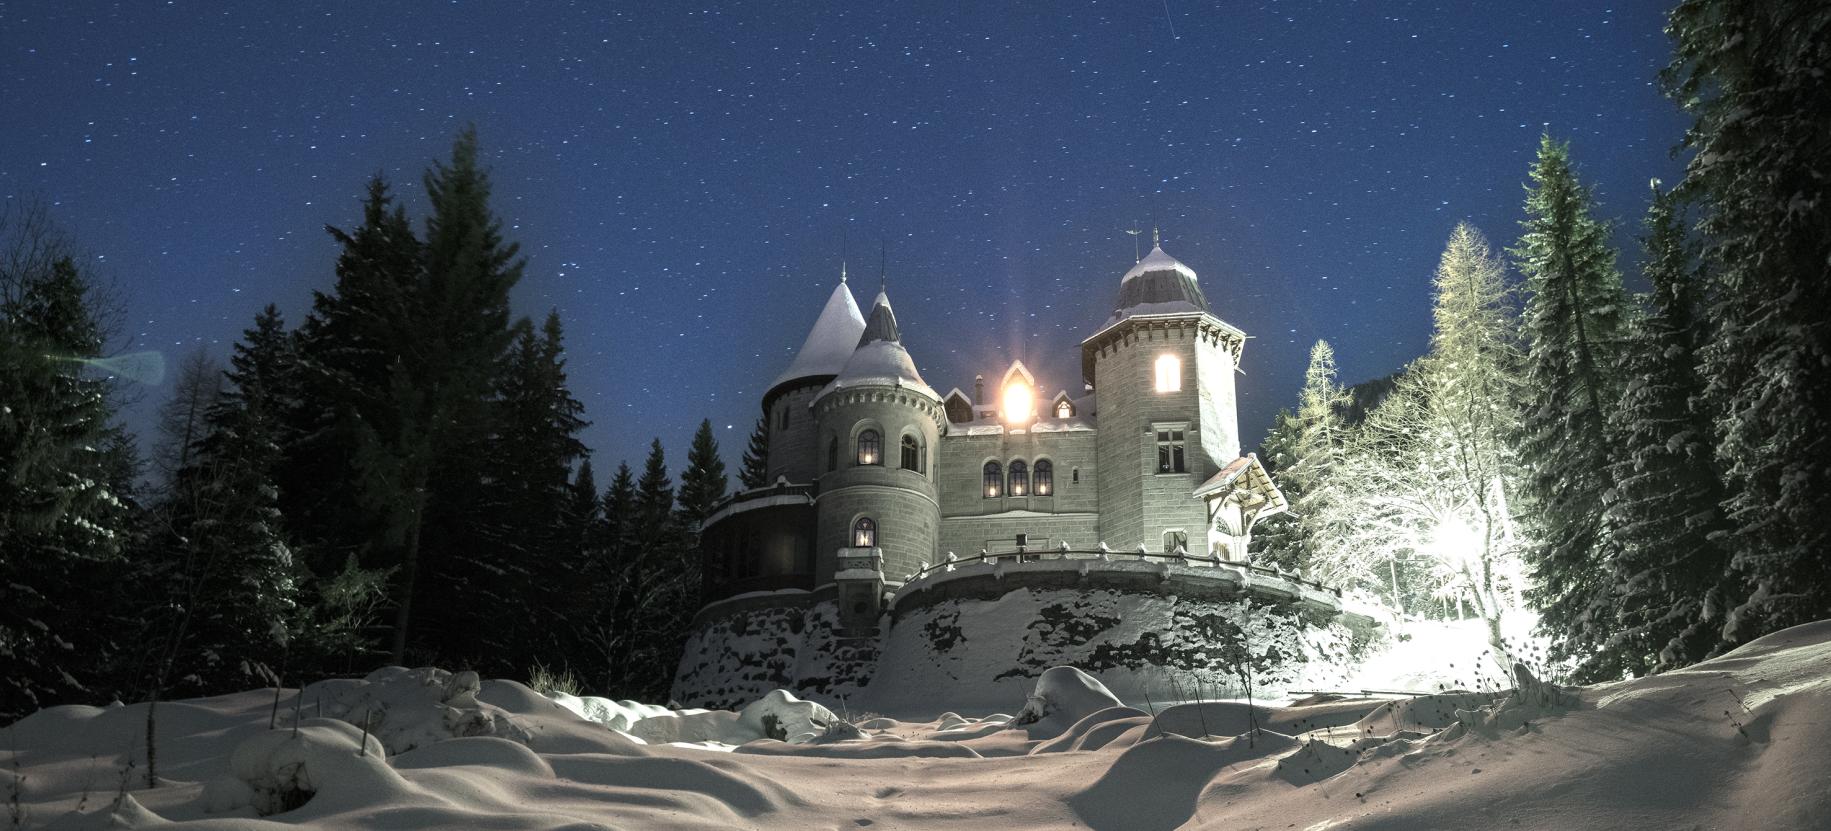 Castel Savoia in winter